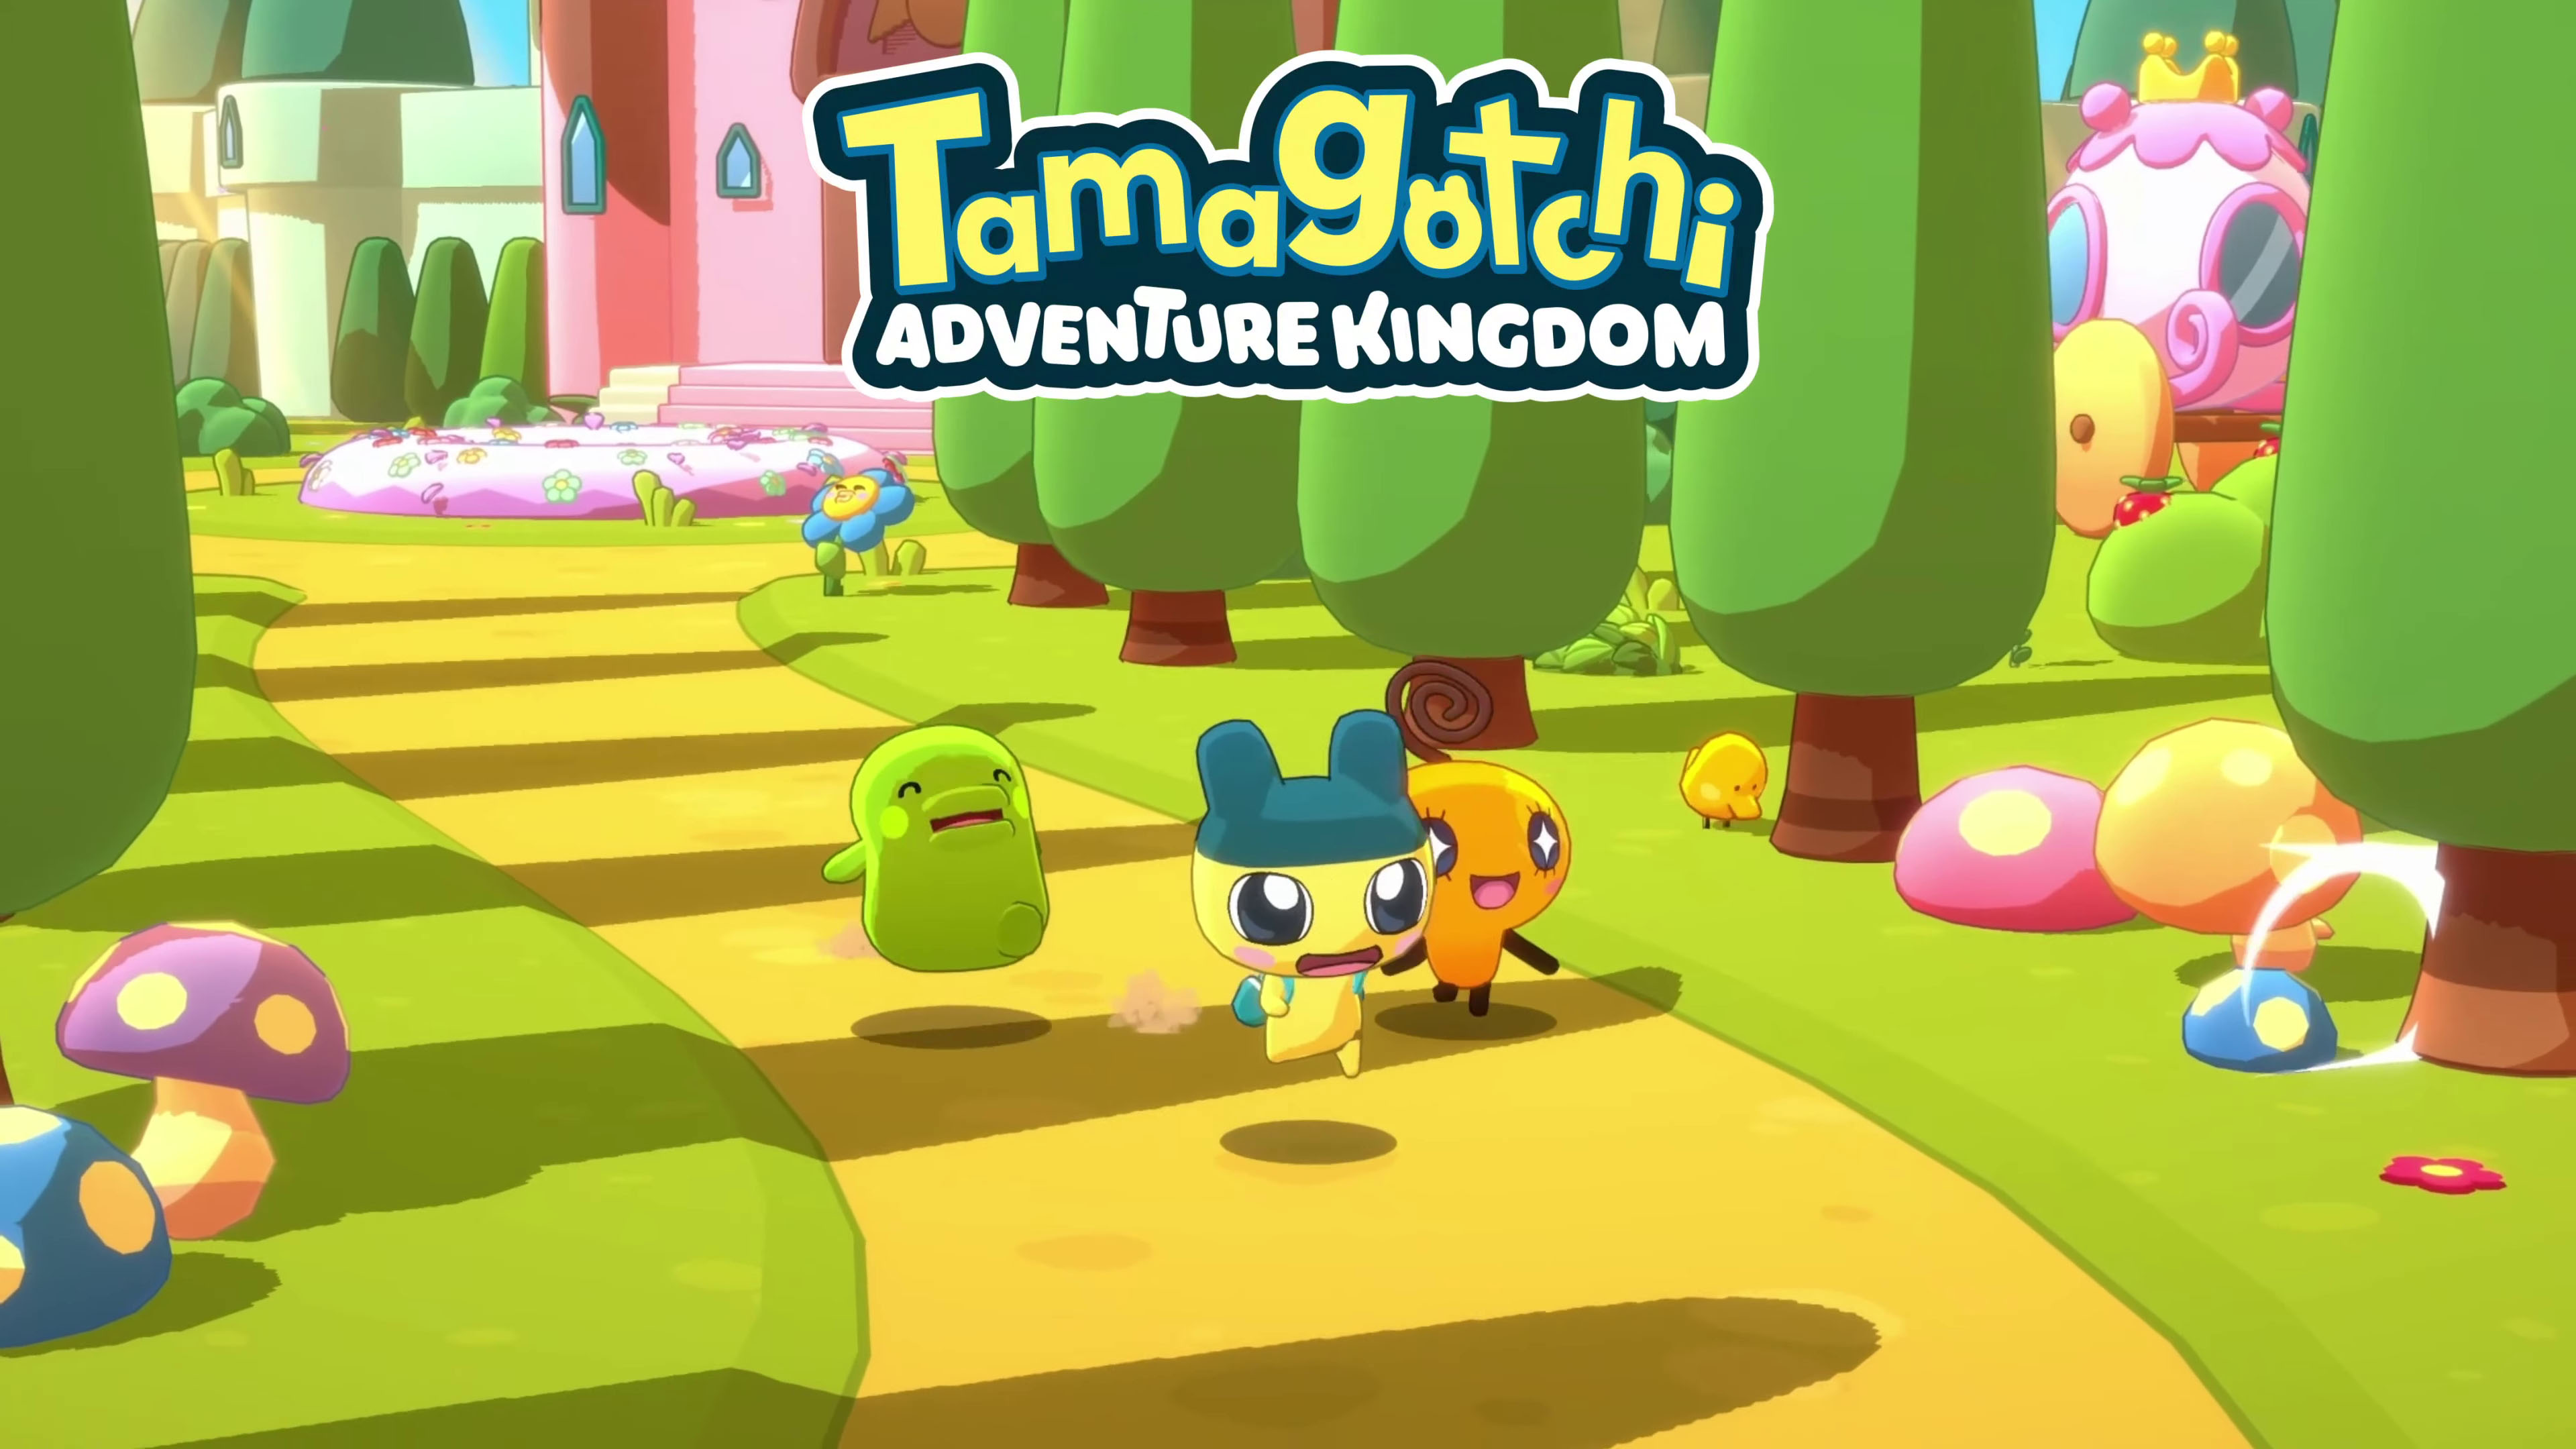 Tamagotchi Adventure Kingdom announced for Apple Arcade - Gematsu